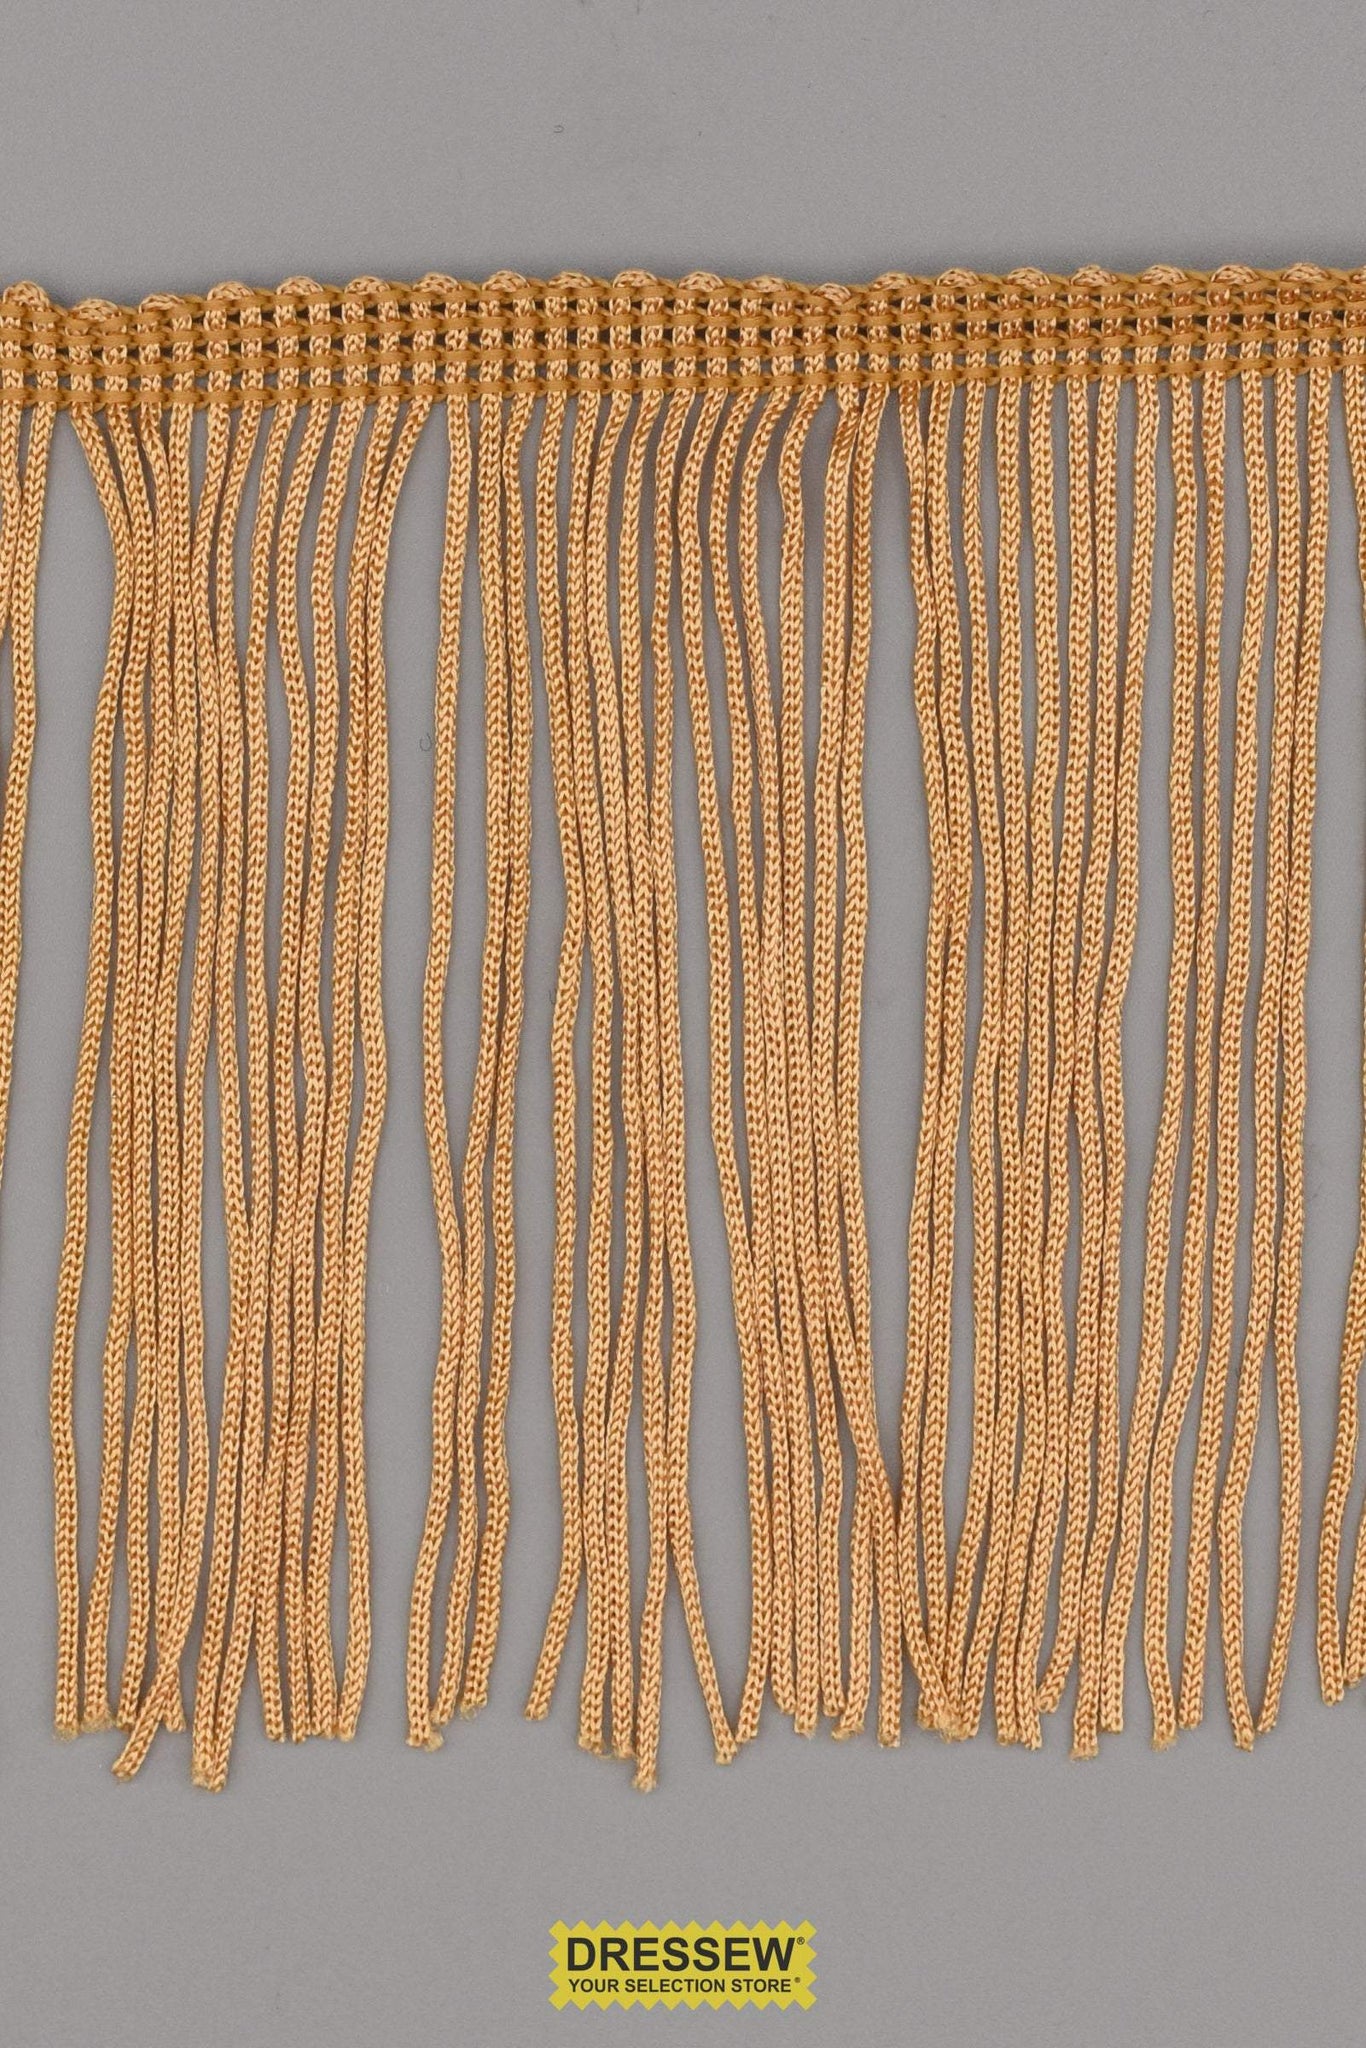 Chainette Fringe 10cm (4") Gold